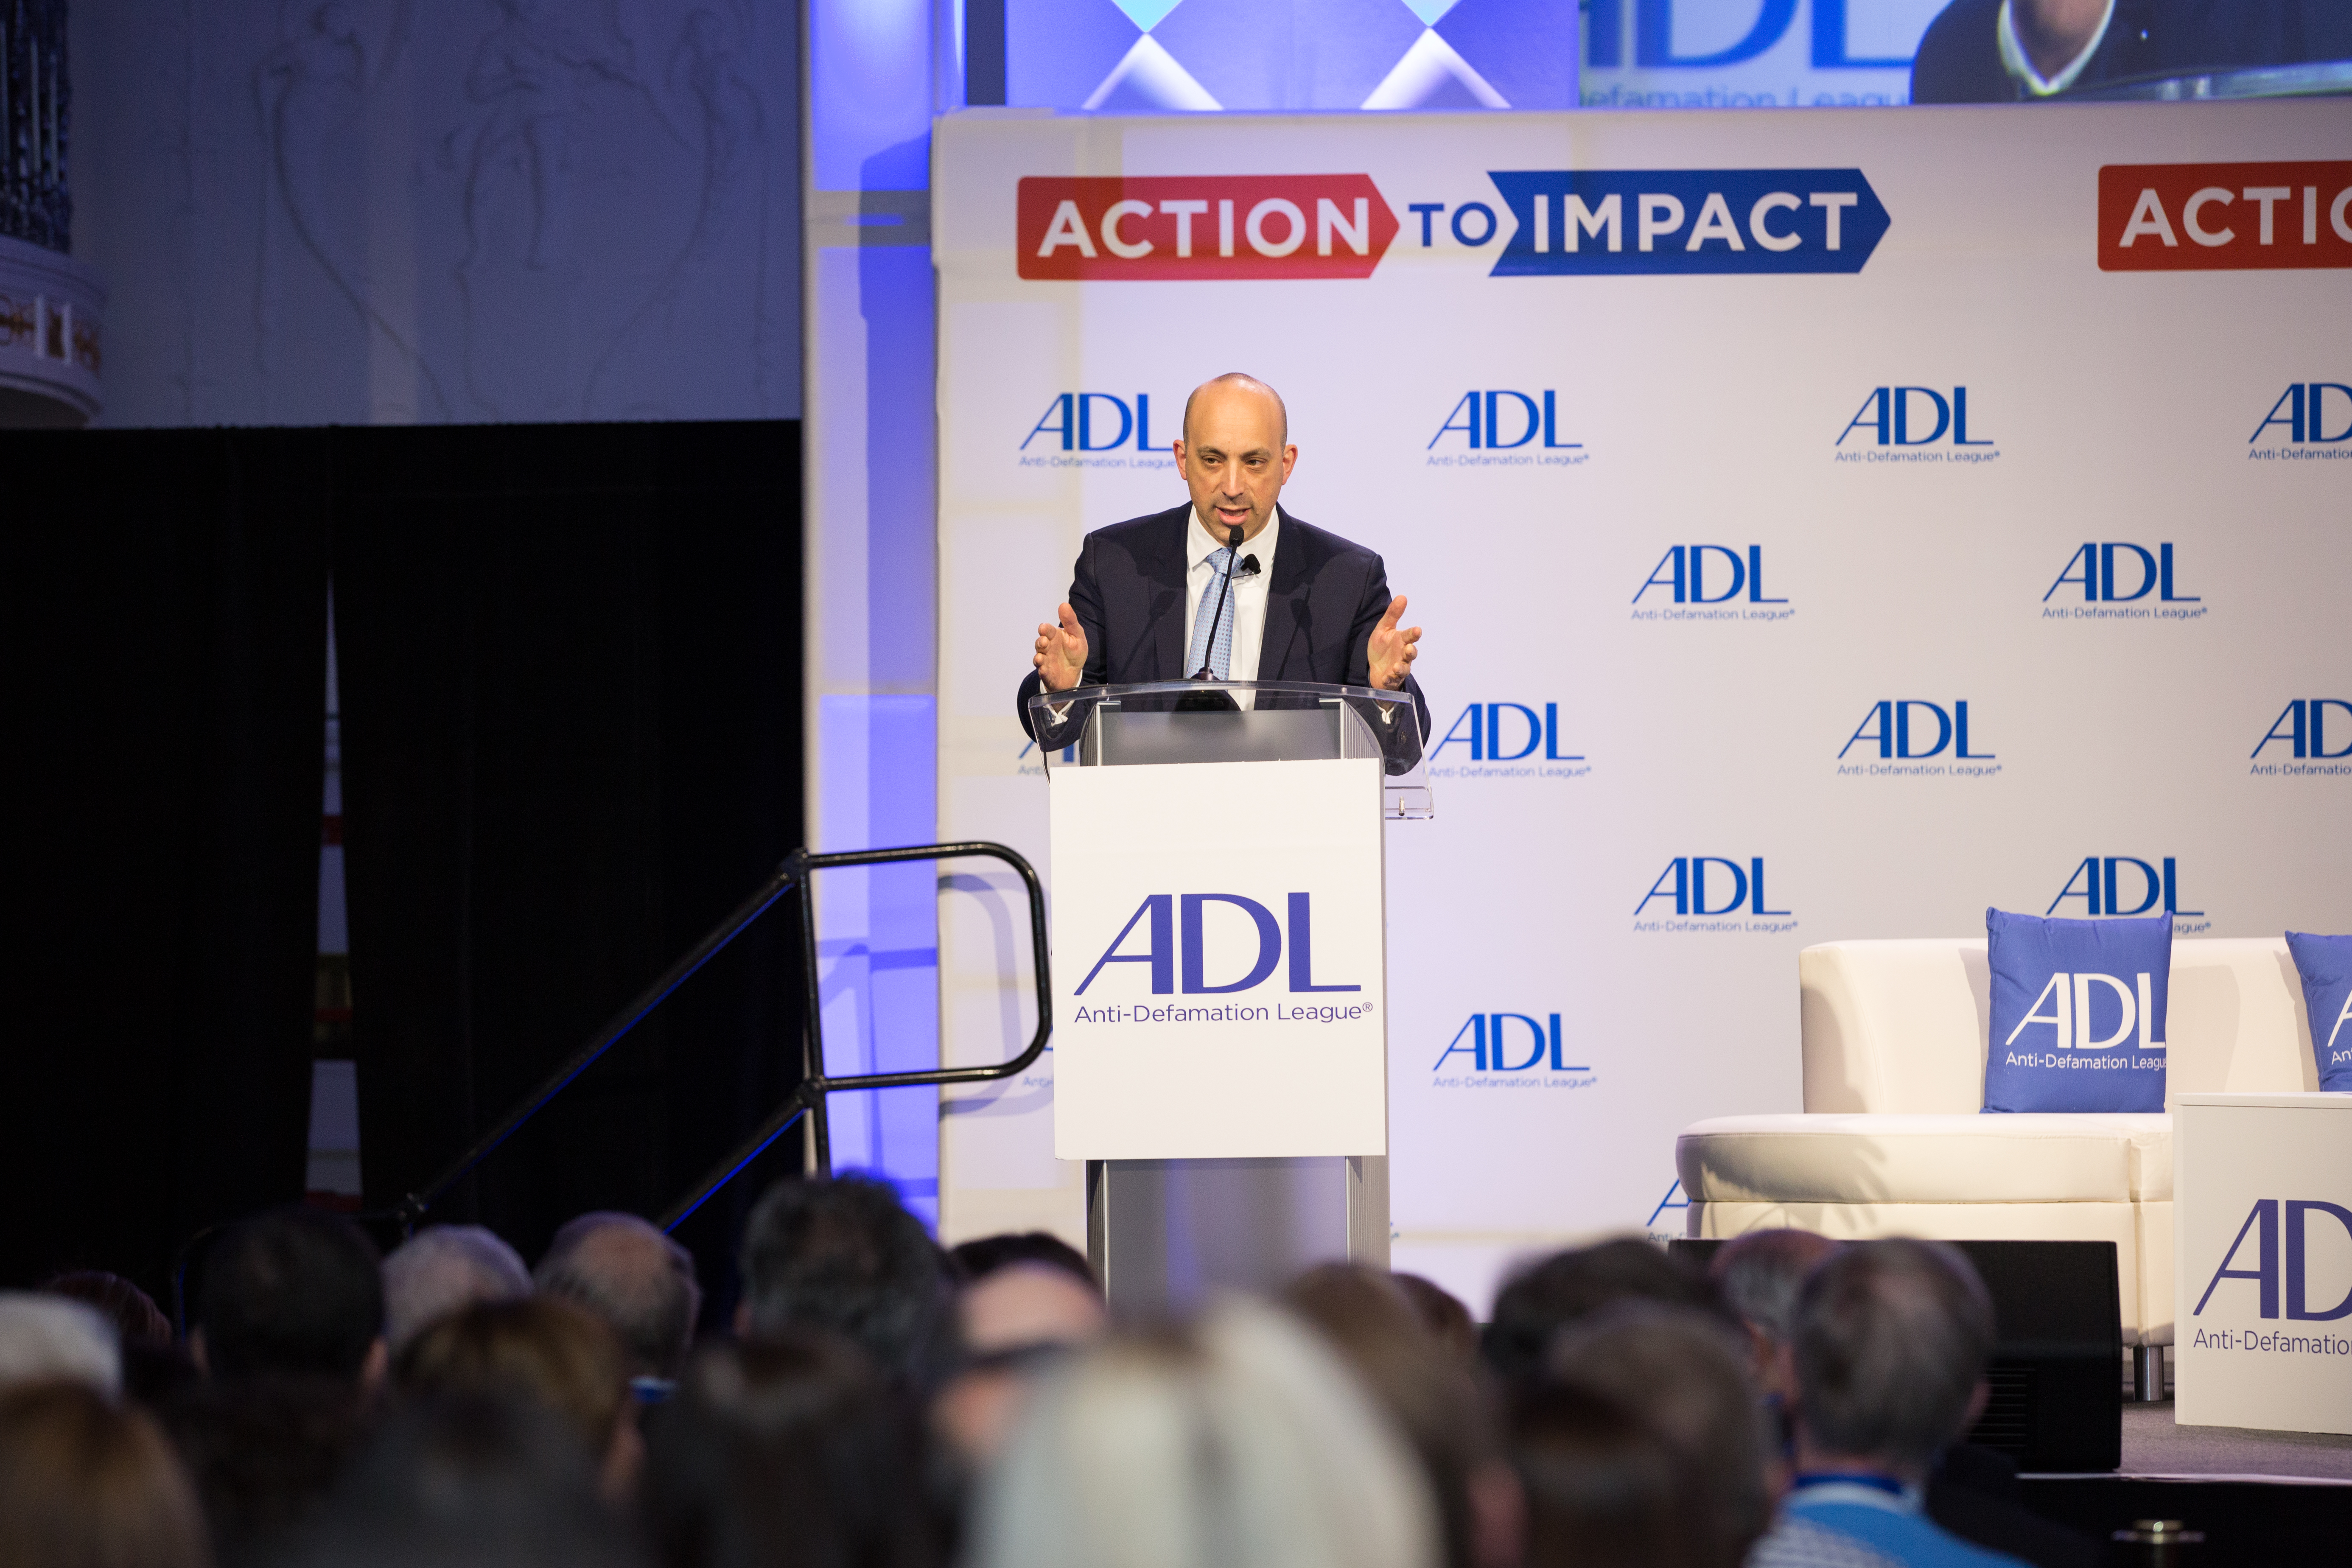 ADL CEO Jonathan Greenblatt Provides Opening Remarks at ADL's National Leadership Summit